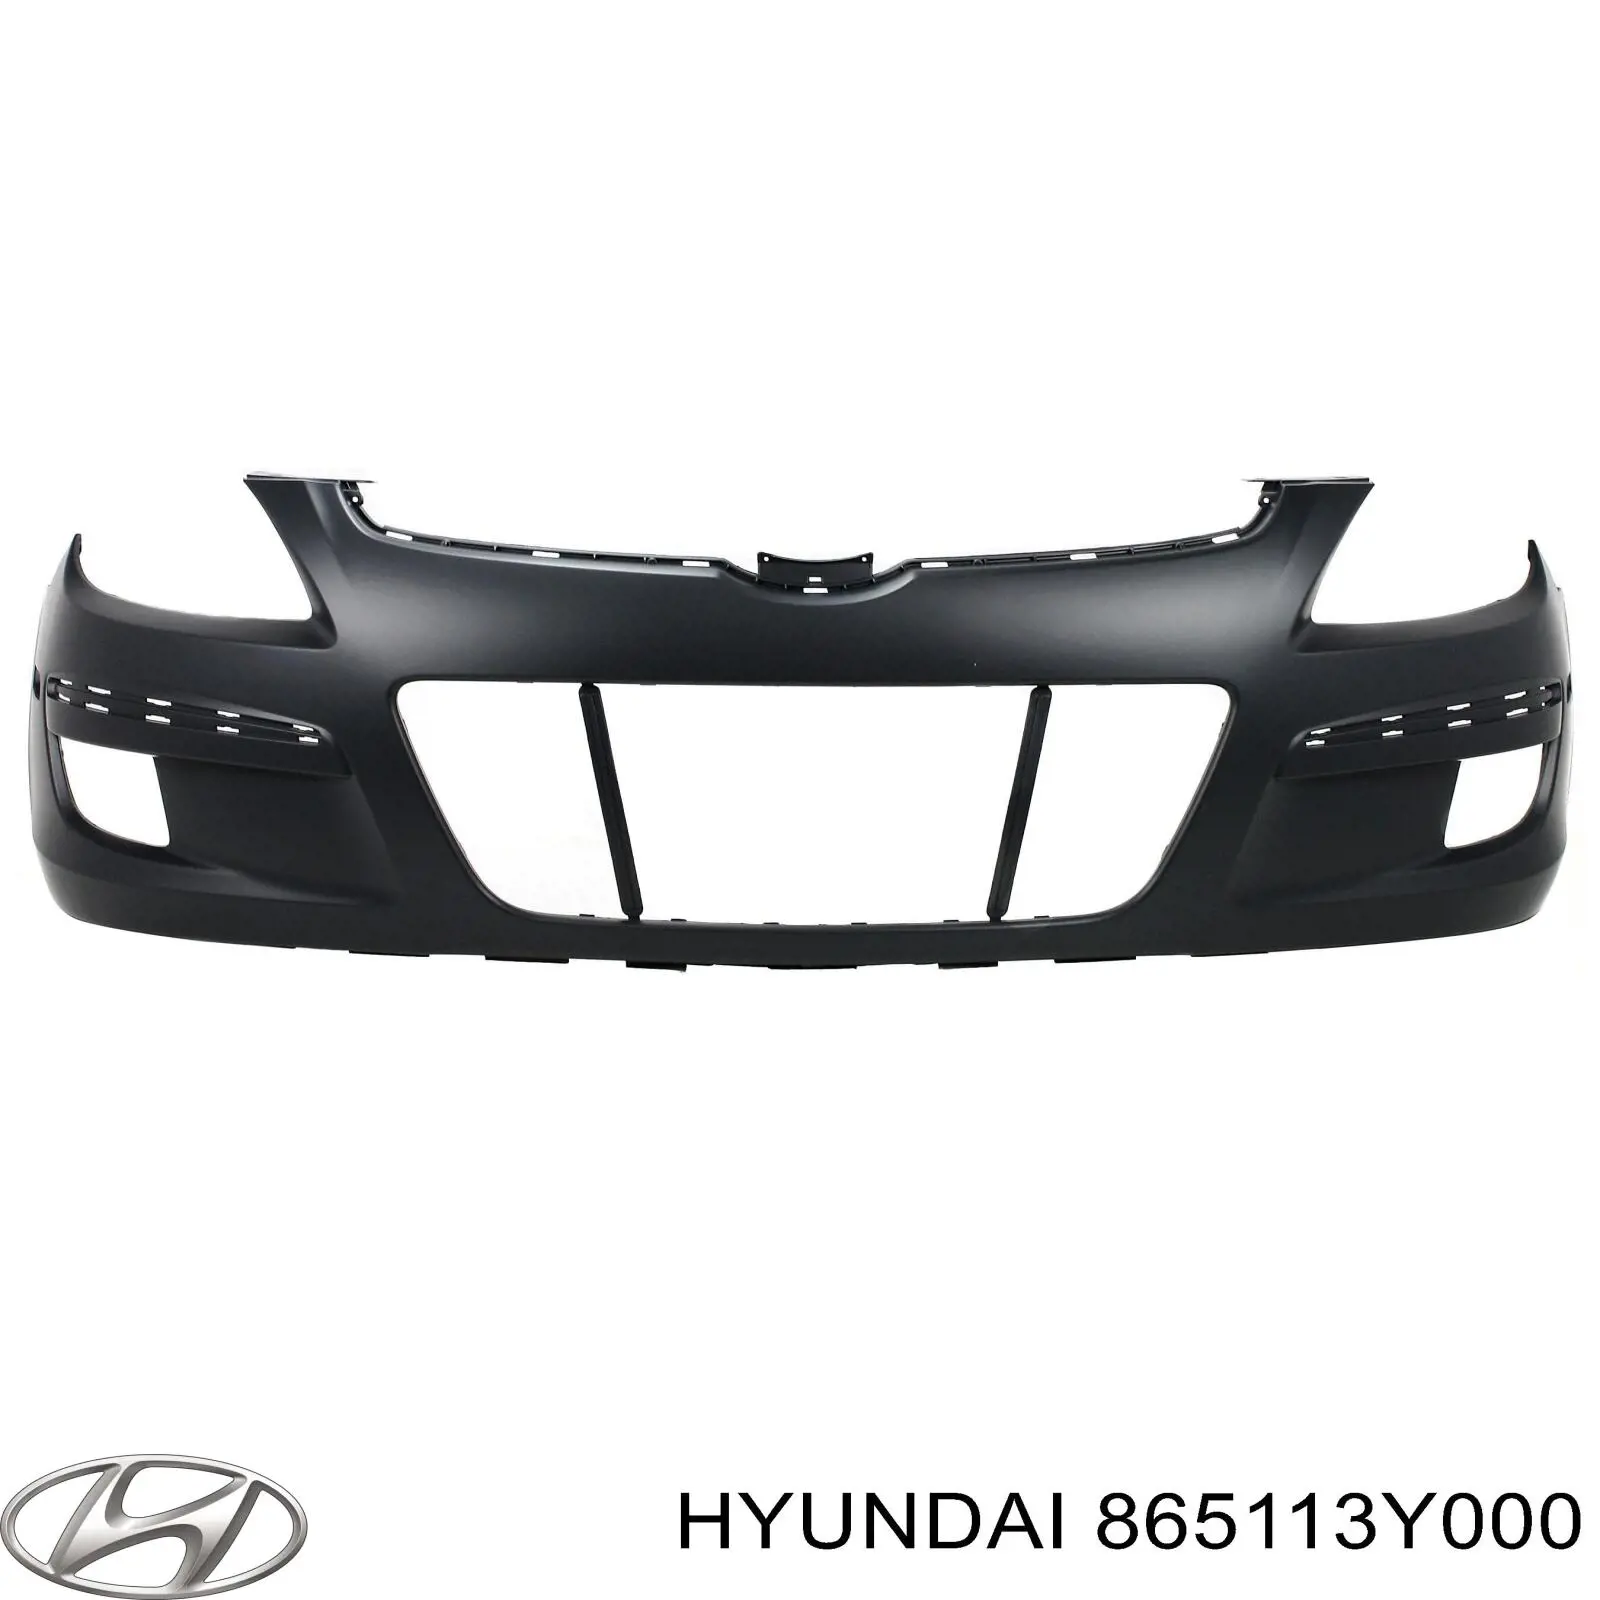 Parachoques delantero Hyundai Elantra 